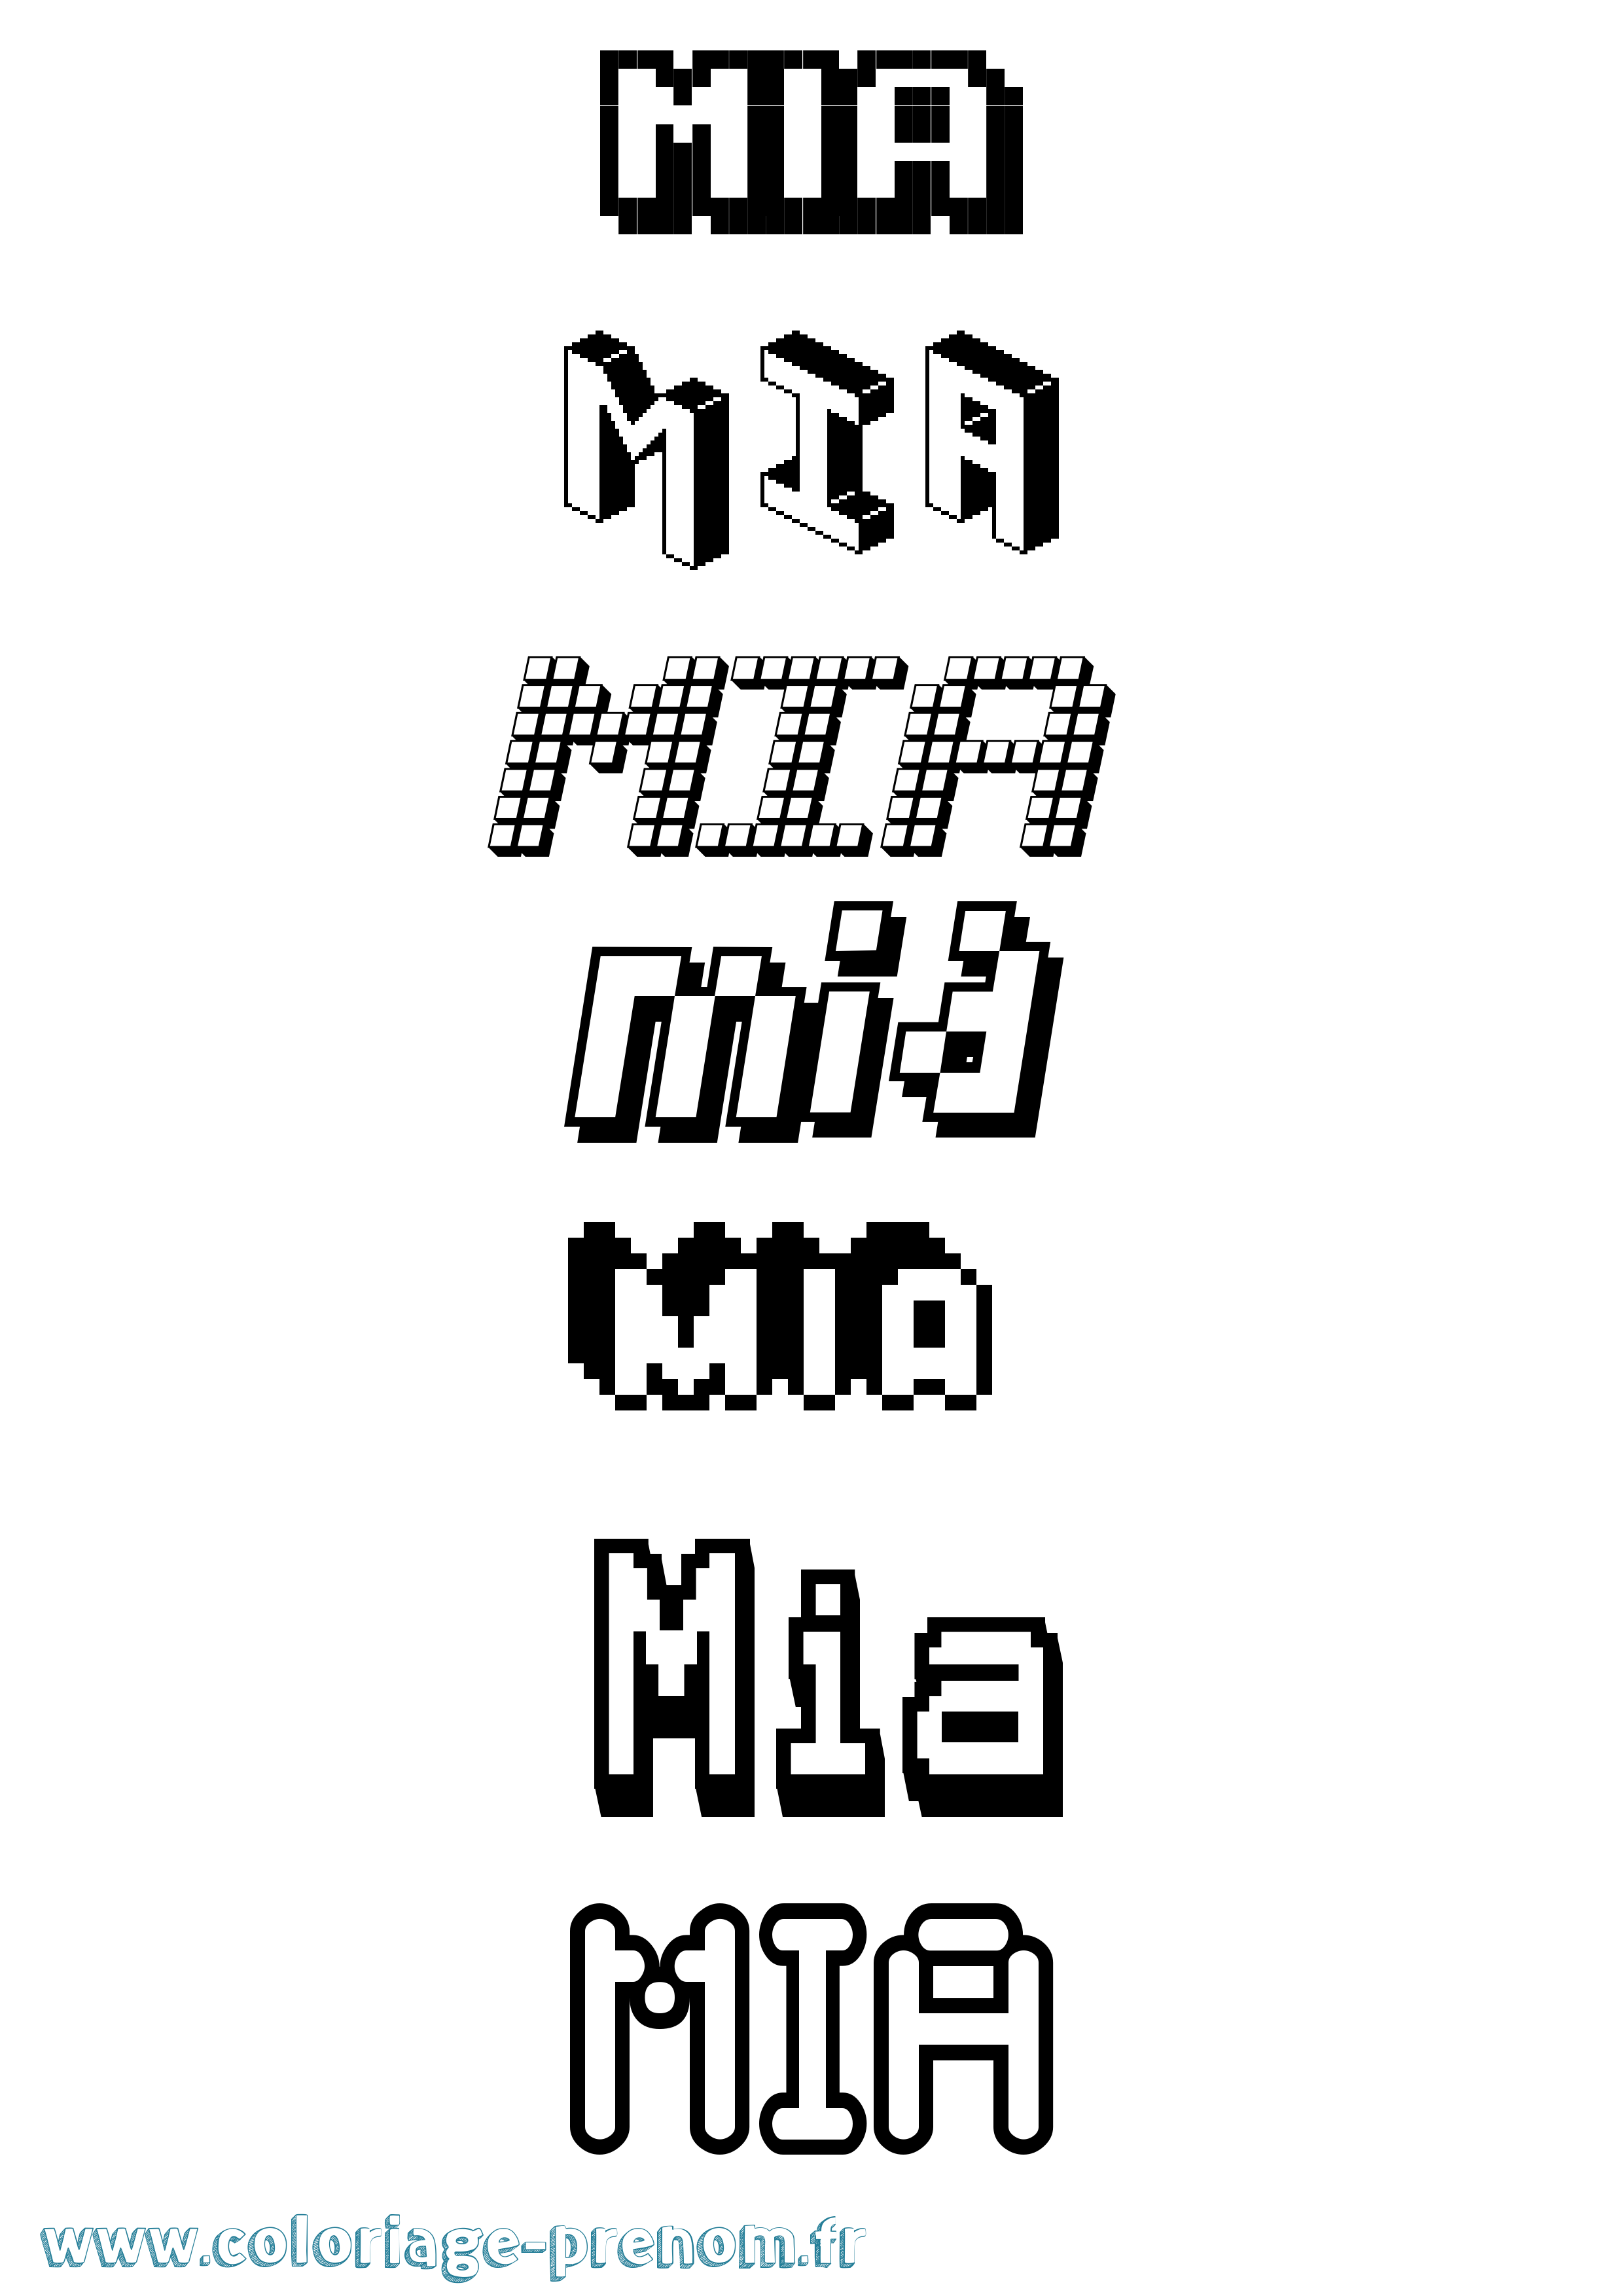 Coloriage prénom Mia Pixel